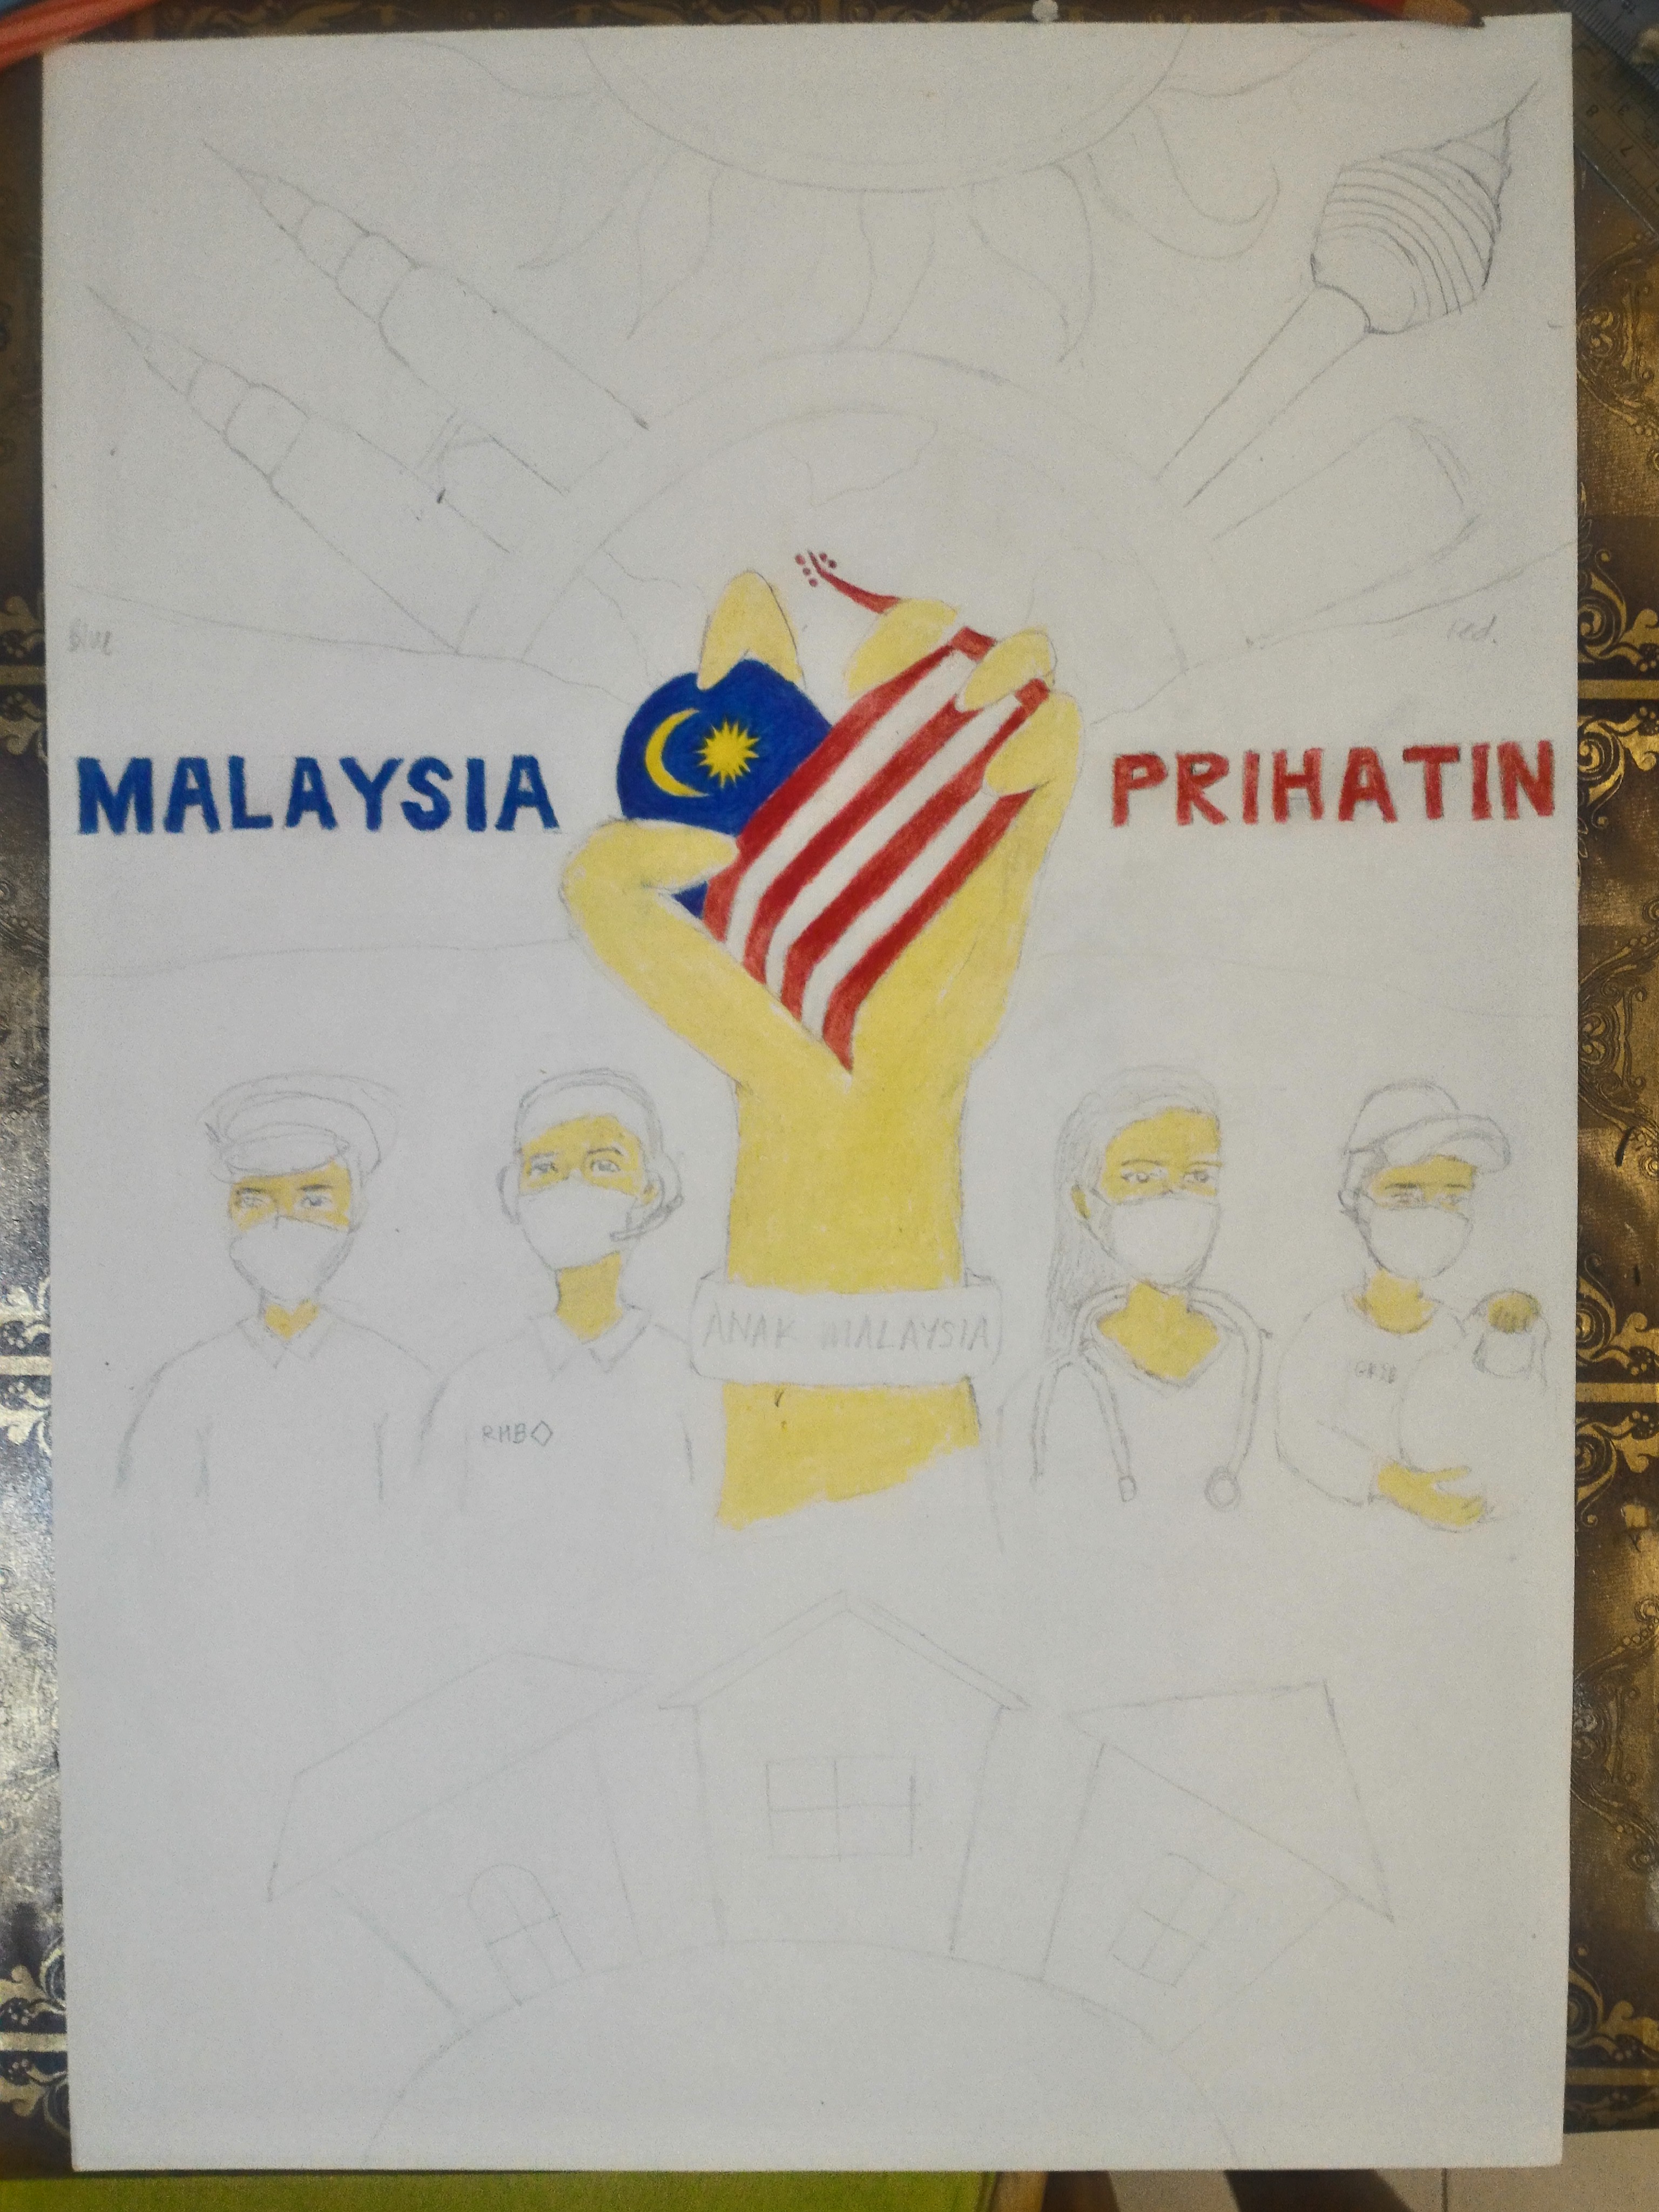 Malaysia prihatin poster drawing